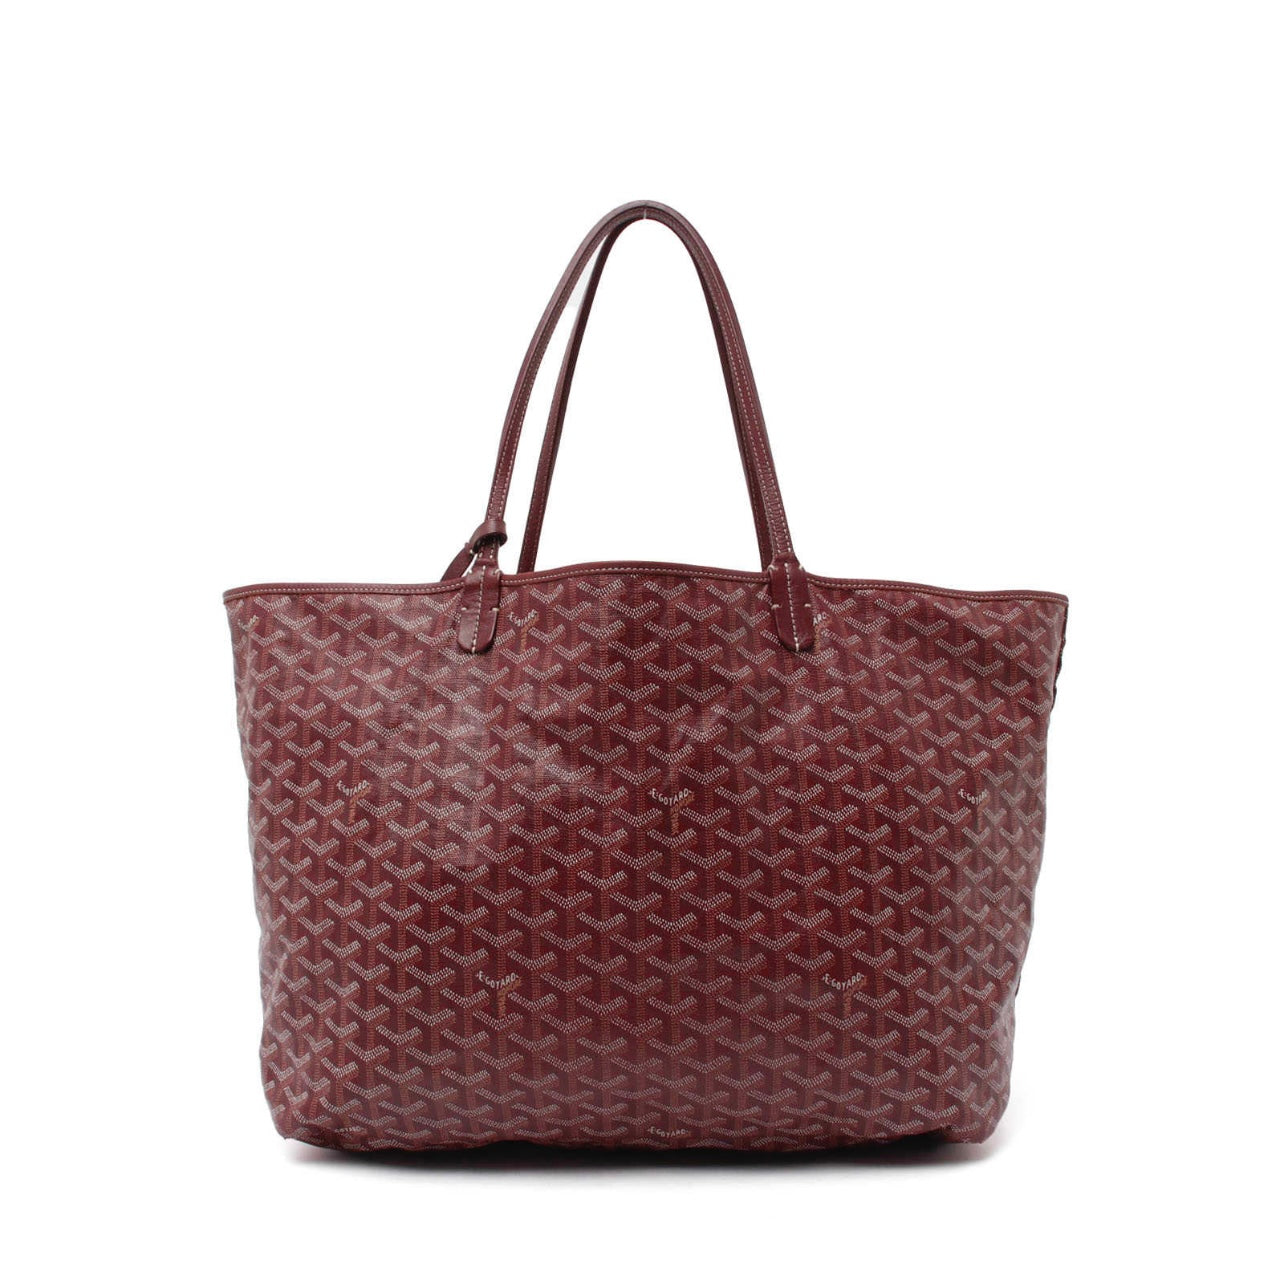 Belvedere PM w/ Tags  Goyard bag, Pink gucci bag, Women handbags